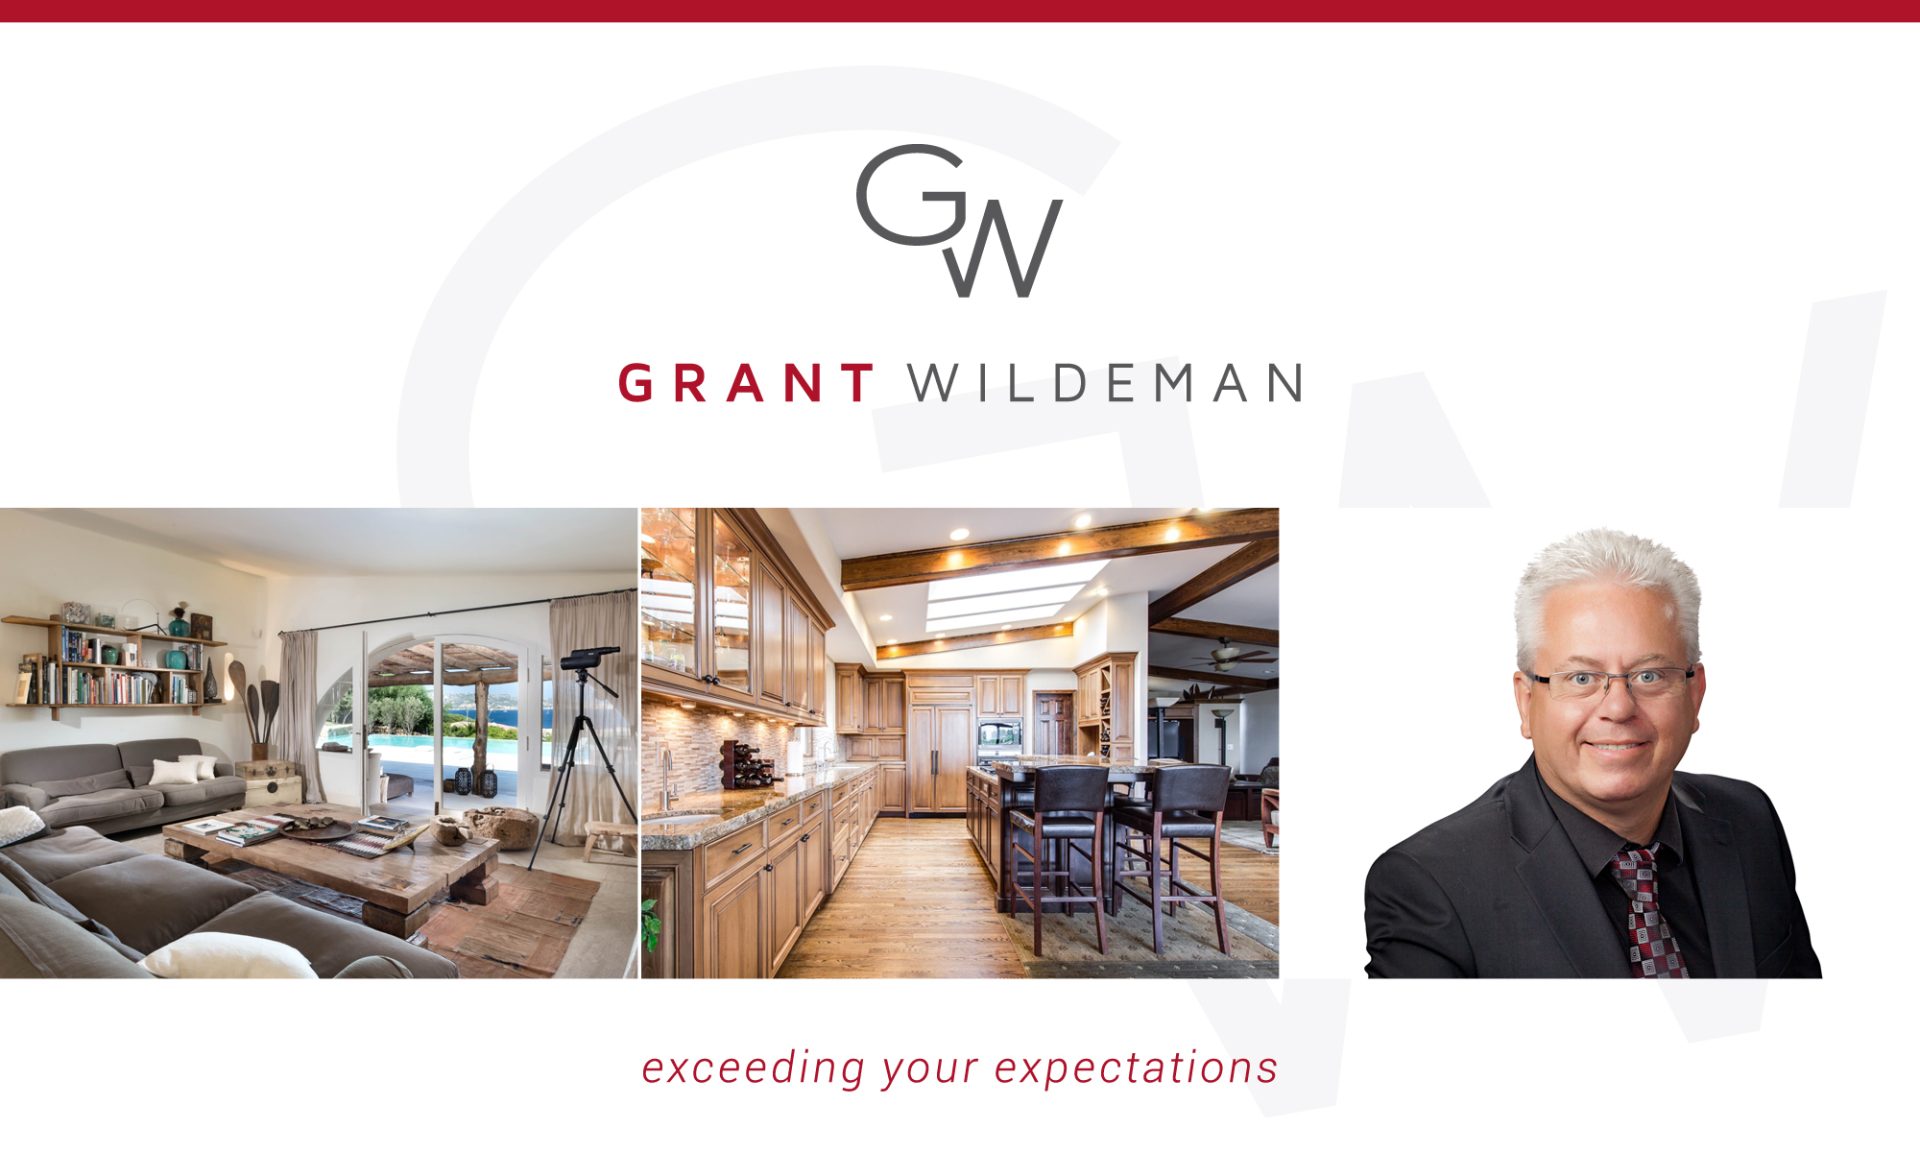 Grant Wildeman